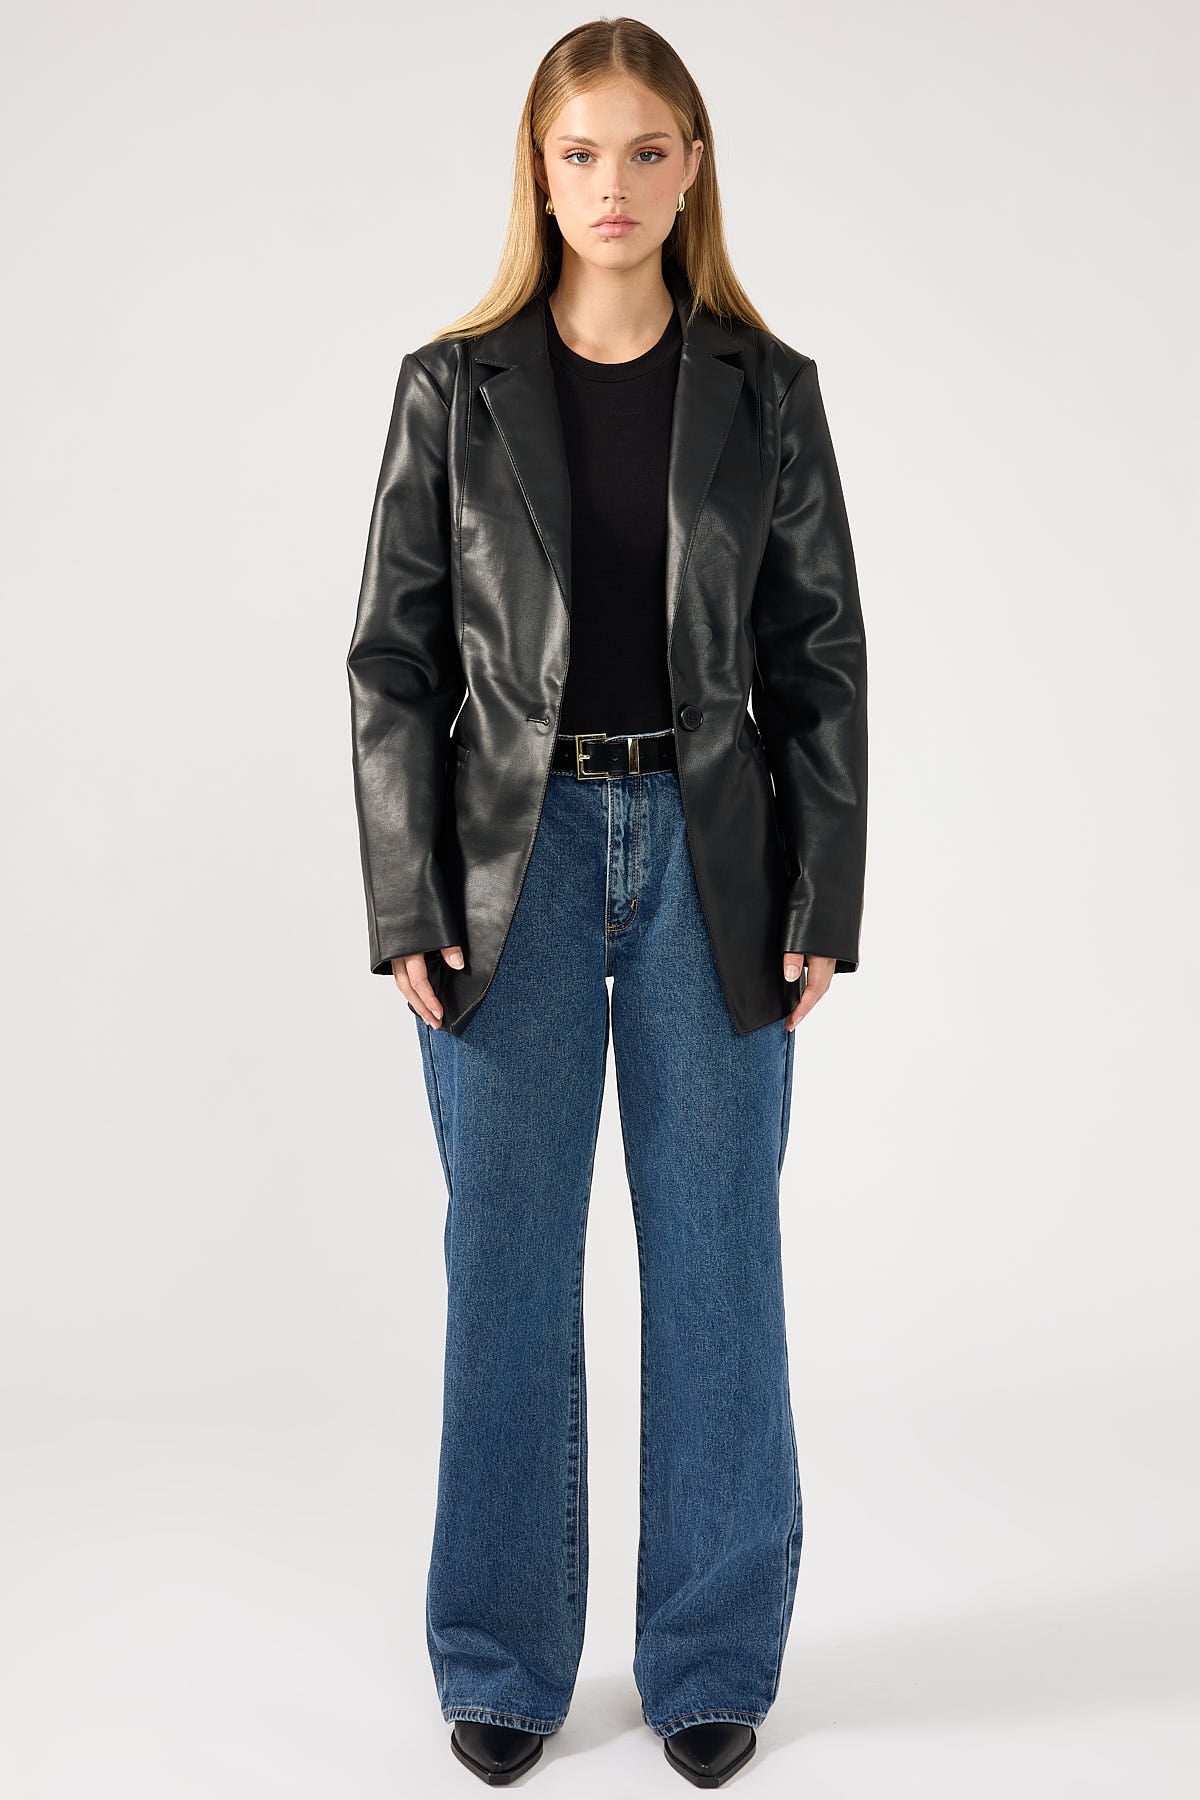 Women's Blazers | Black, Grey and Leather Blazers – Perfect Stranger